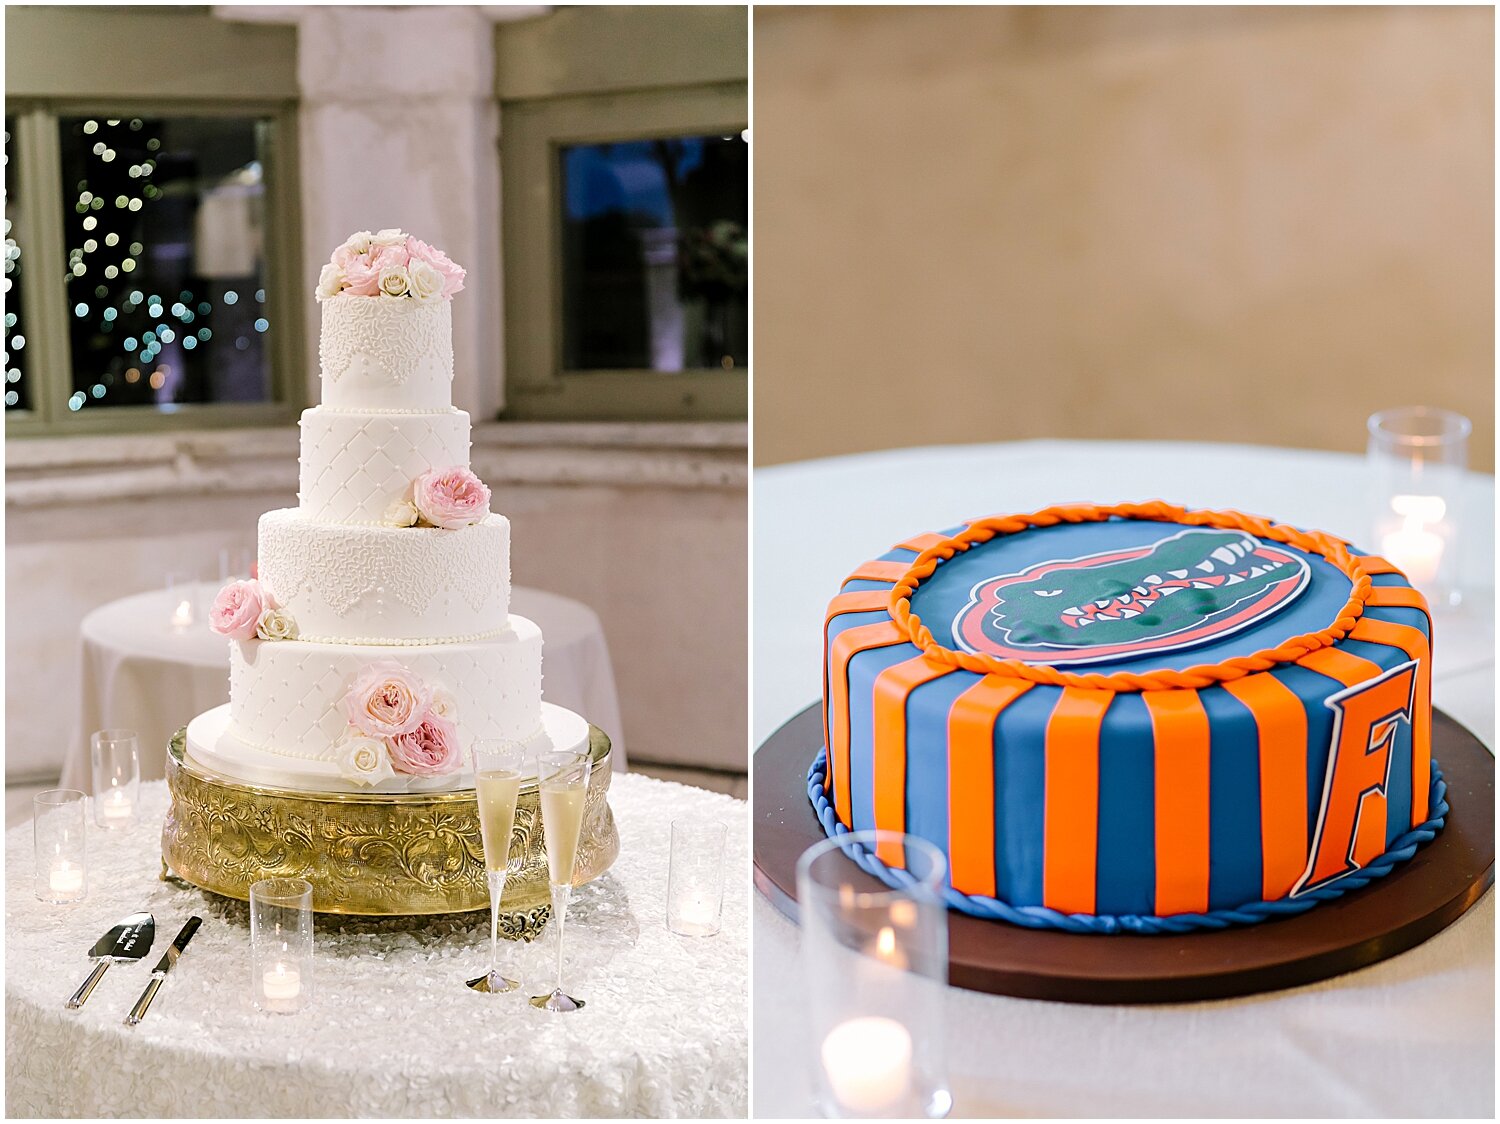  bride and groom’s wedding cake. Gators wedding cake for the groom 